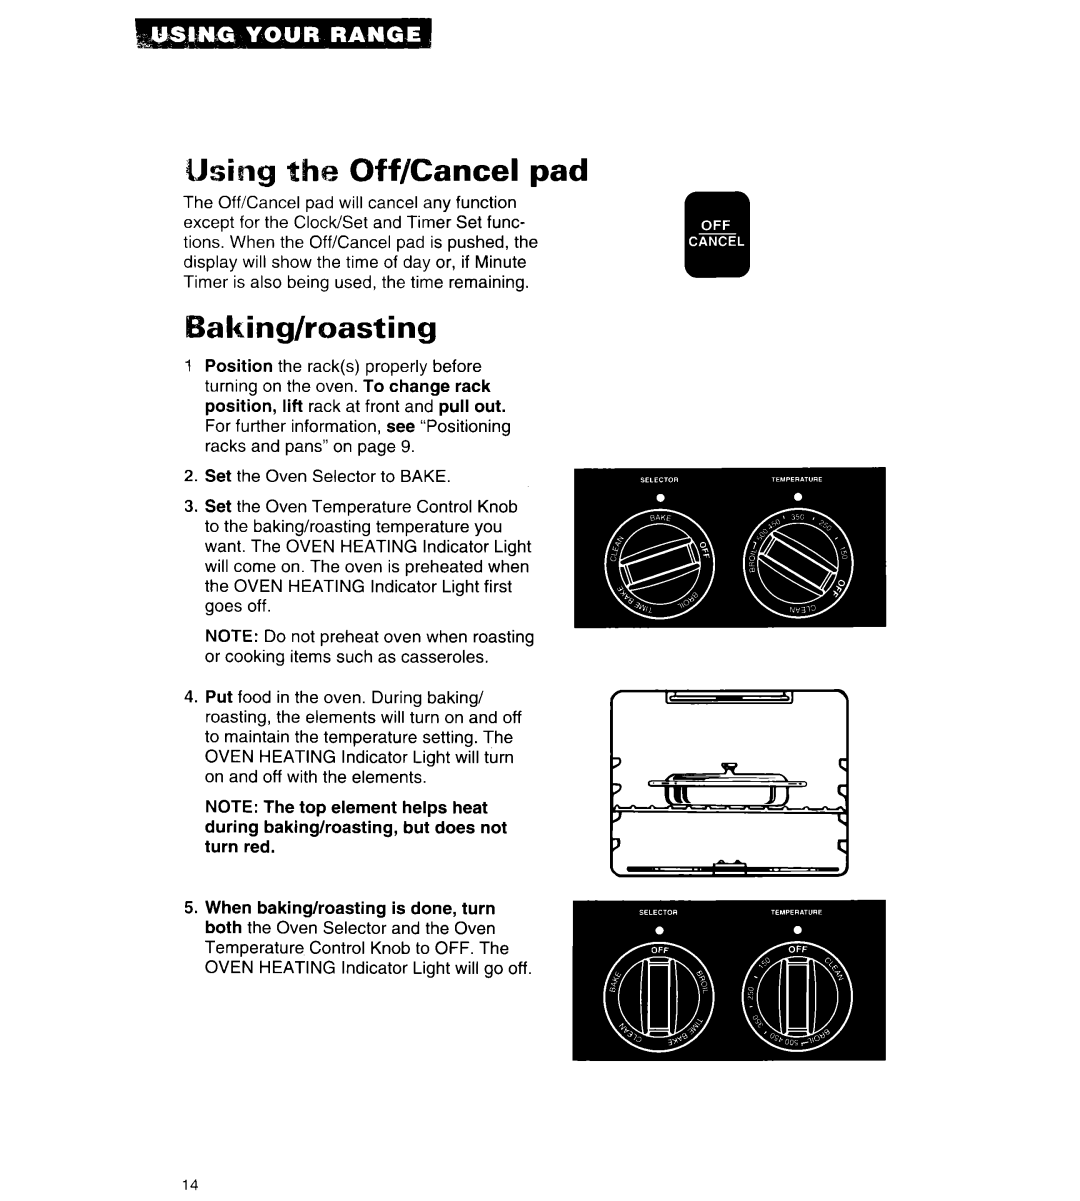 Whirlpool RF376PCY manual Using the Off/Cancel pad, akinghoasting 